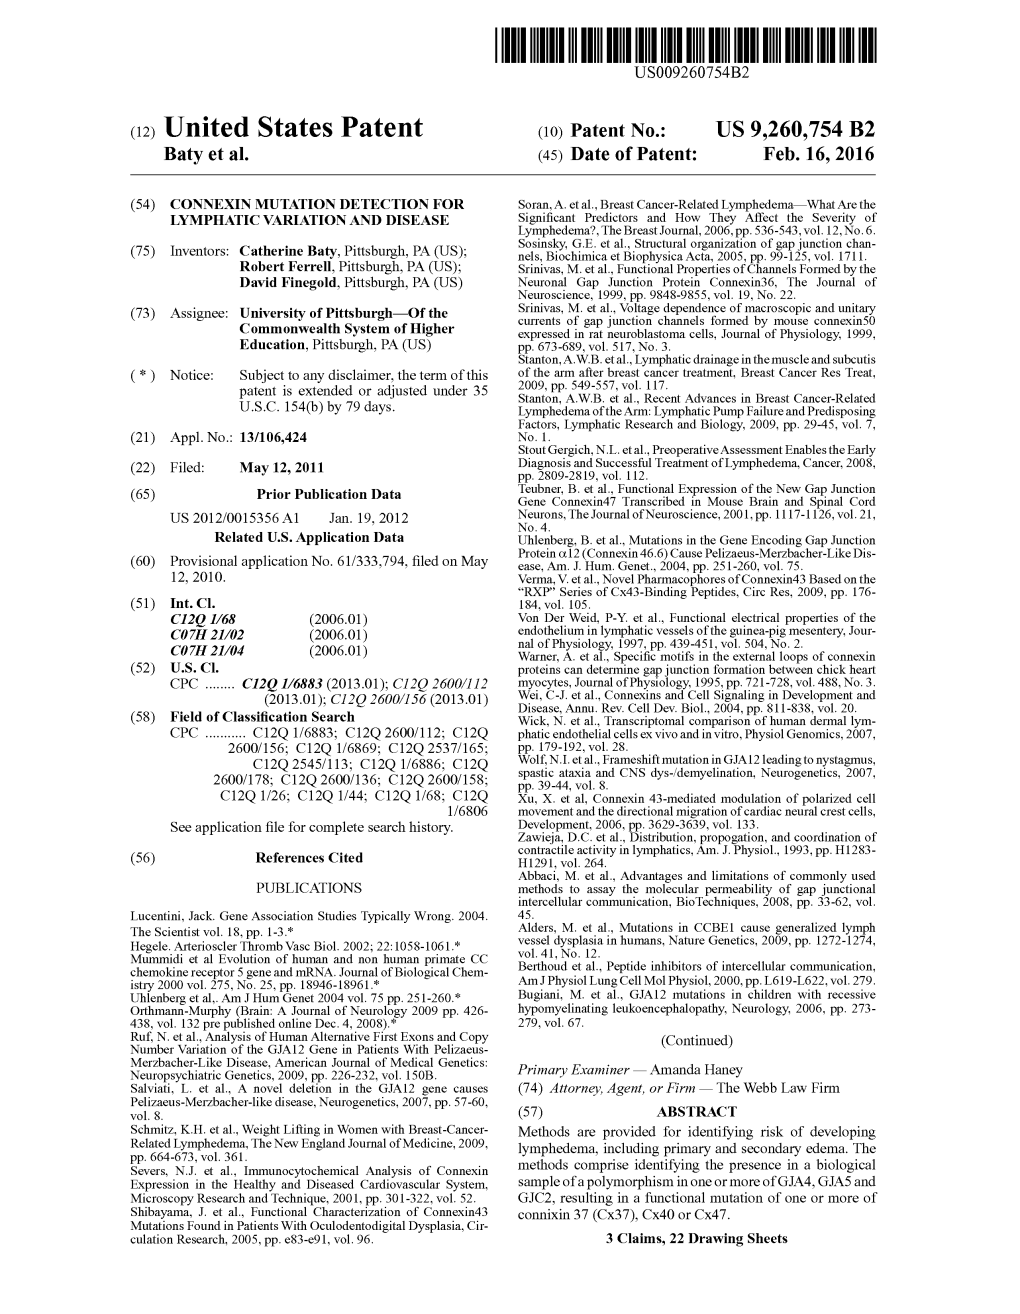 (12) United States Patent (10) Patent No.: US 9.260,754 B2 Baty Et Al